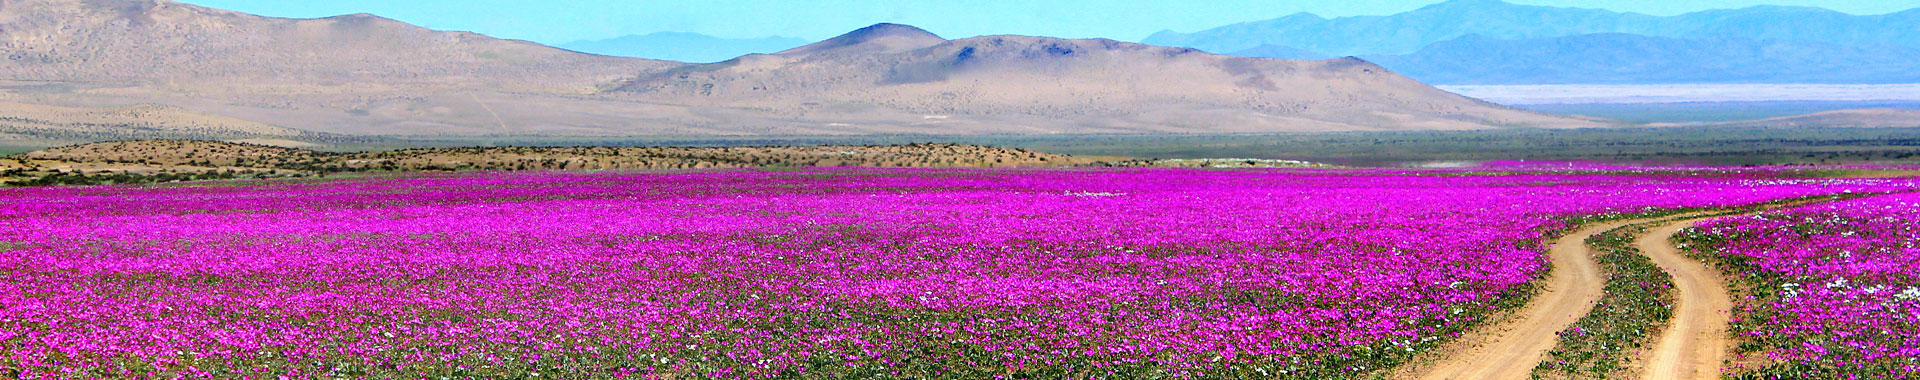 Chile - Atacama - Paquetes - Colores